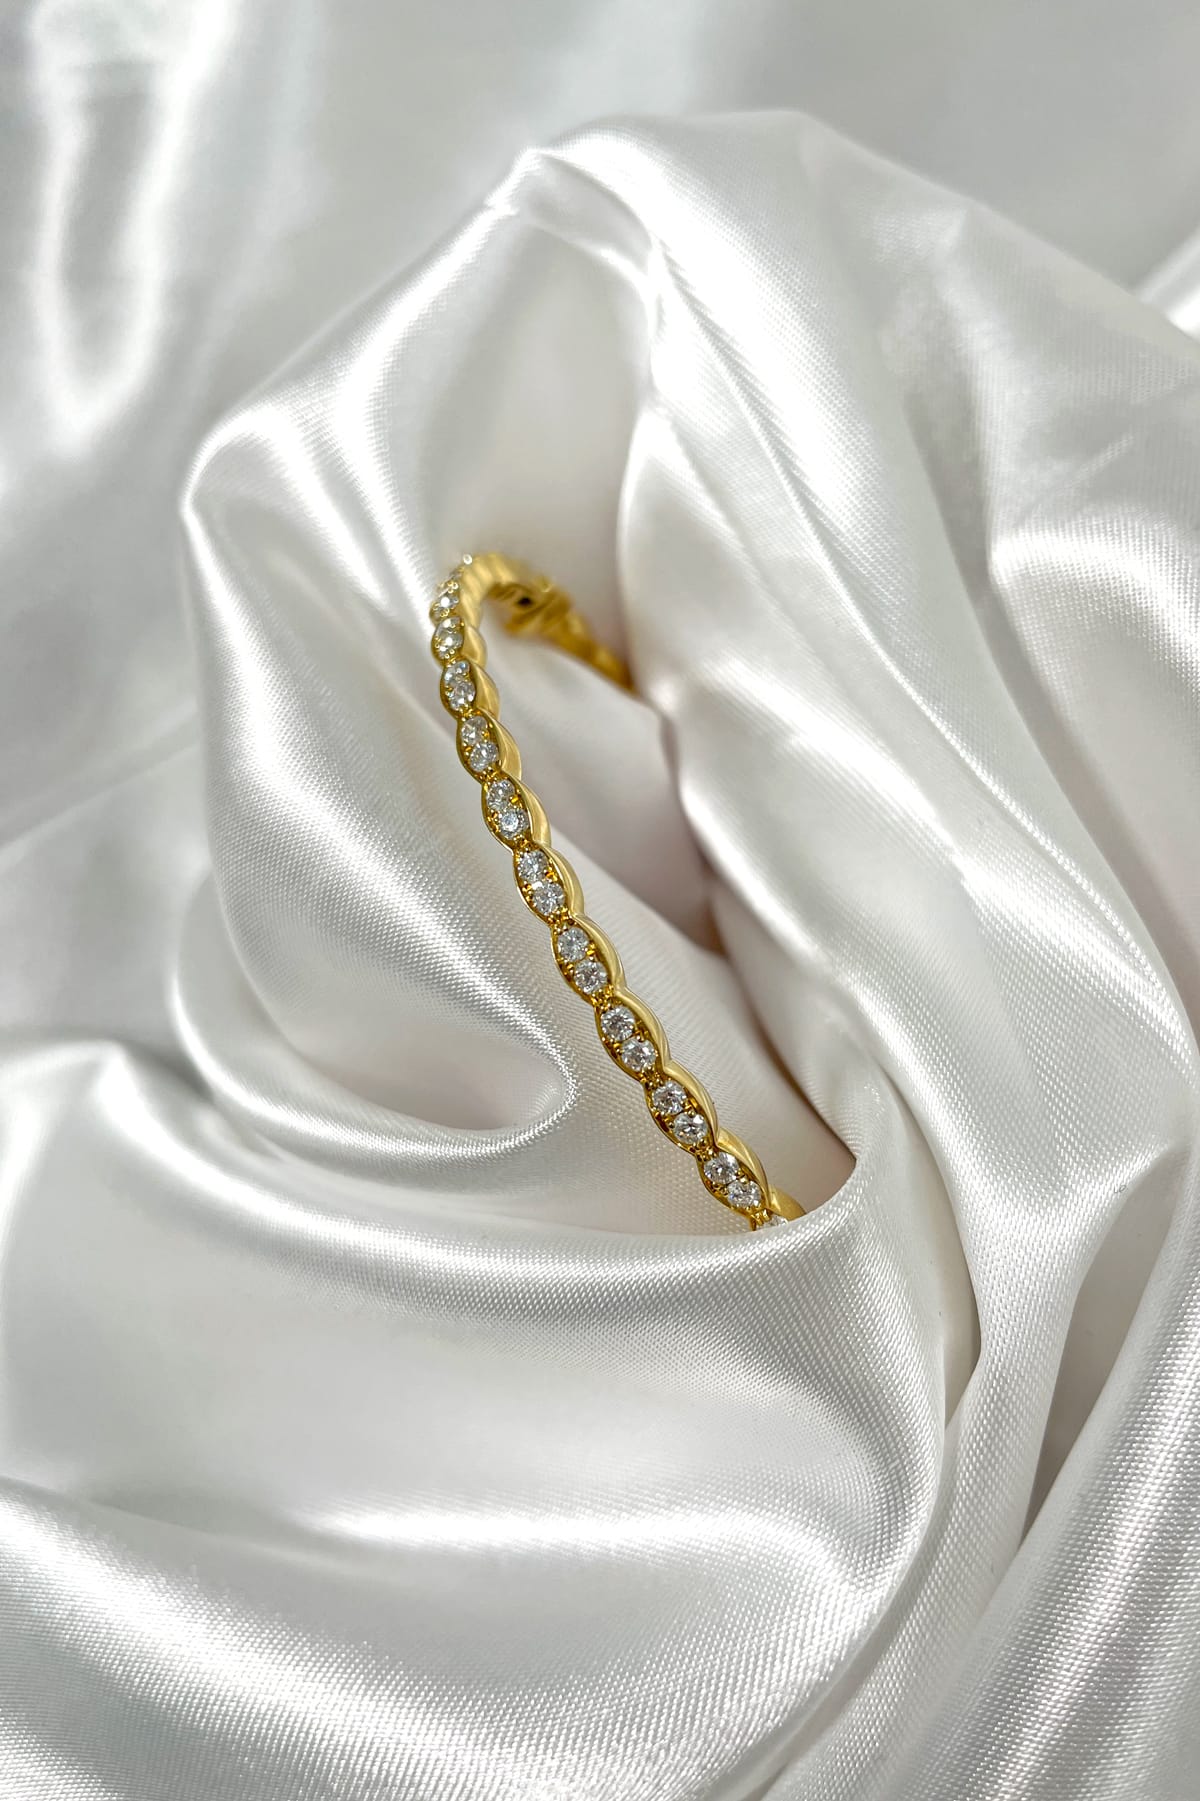 Lorelei Floral Diamond Bangle From Hearts On Fire available at LeGassick Diamonds and Jewellery Gold Coast, Australia.